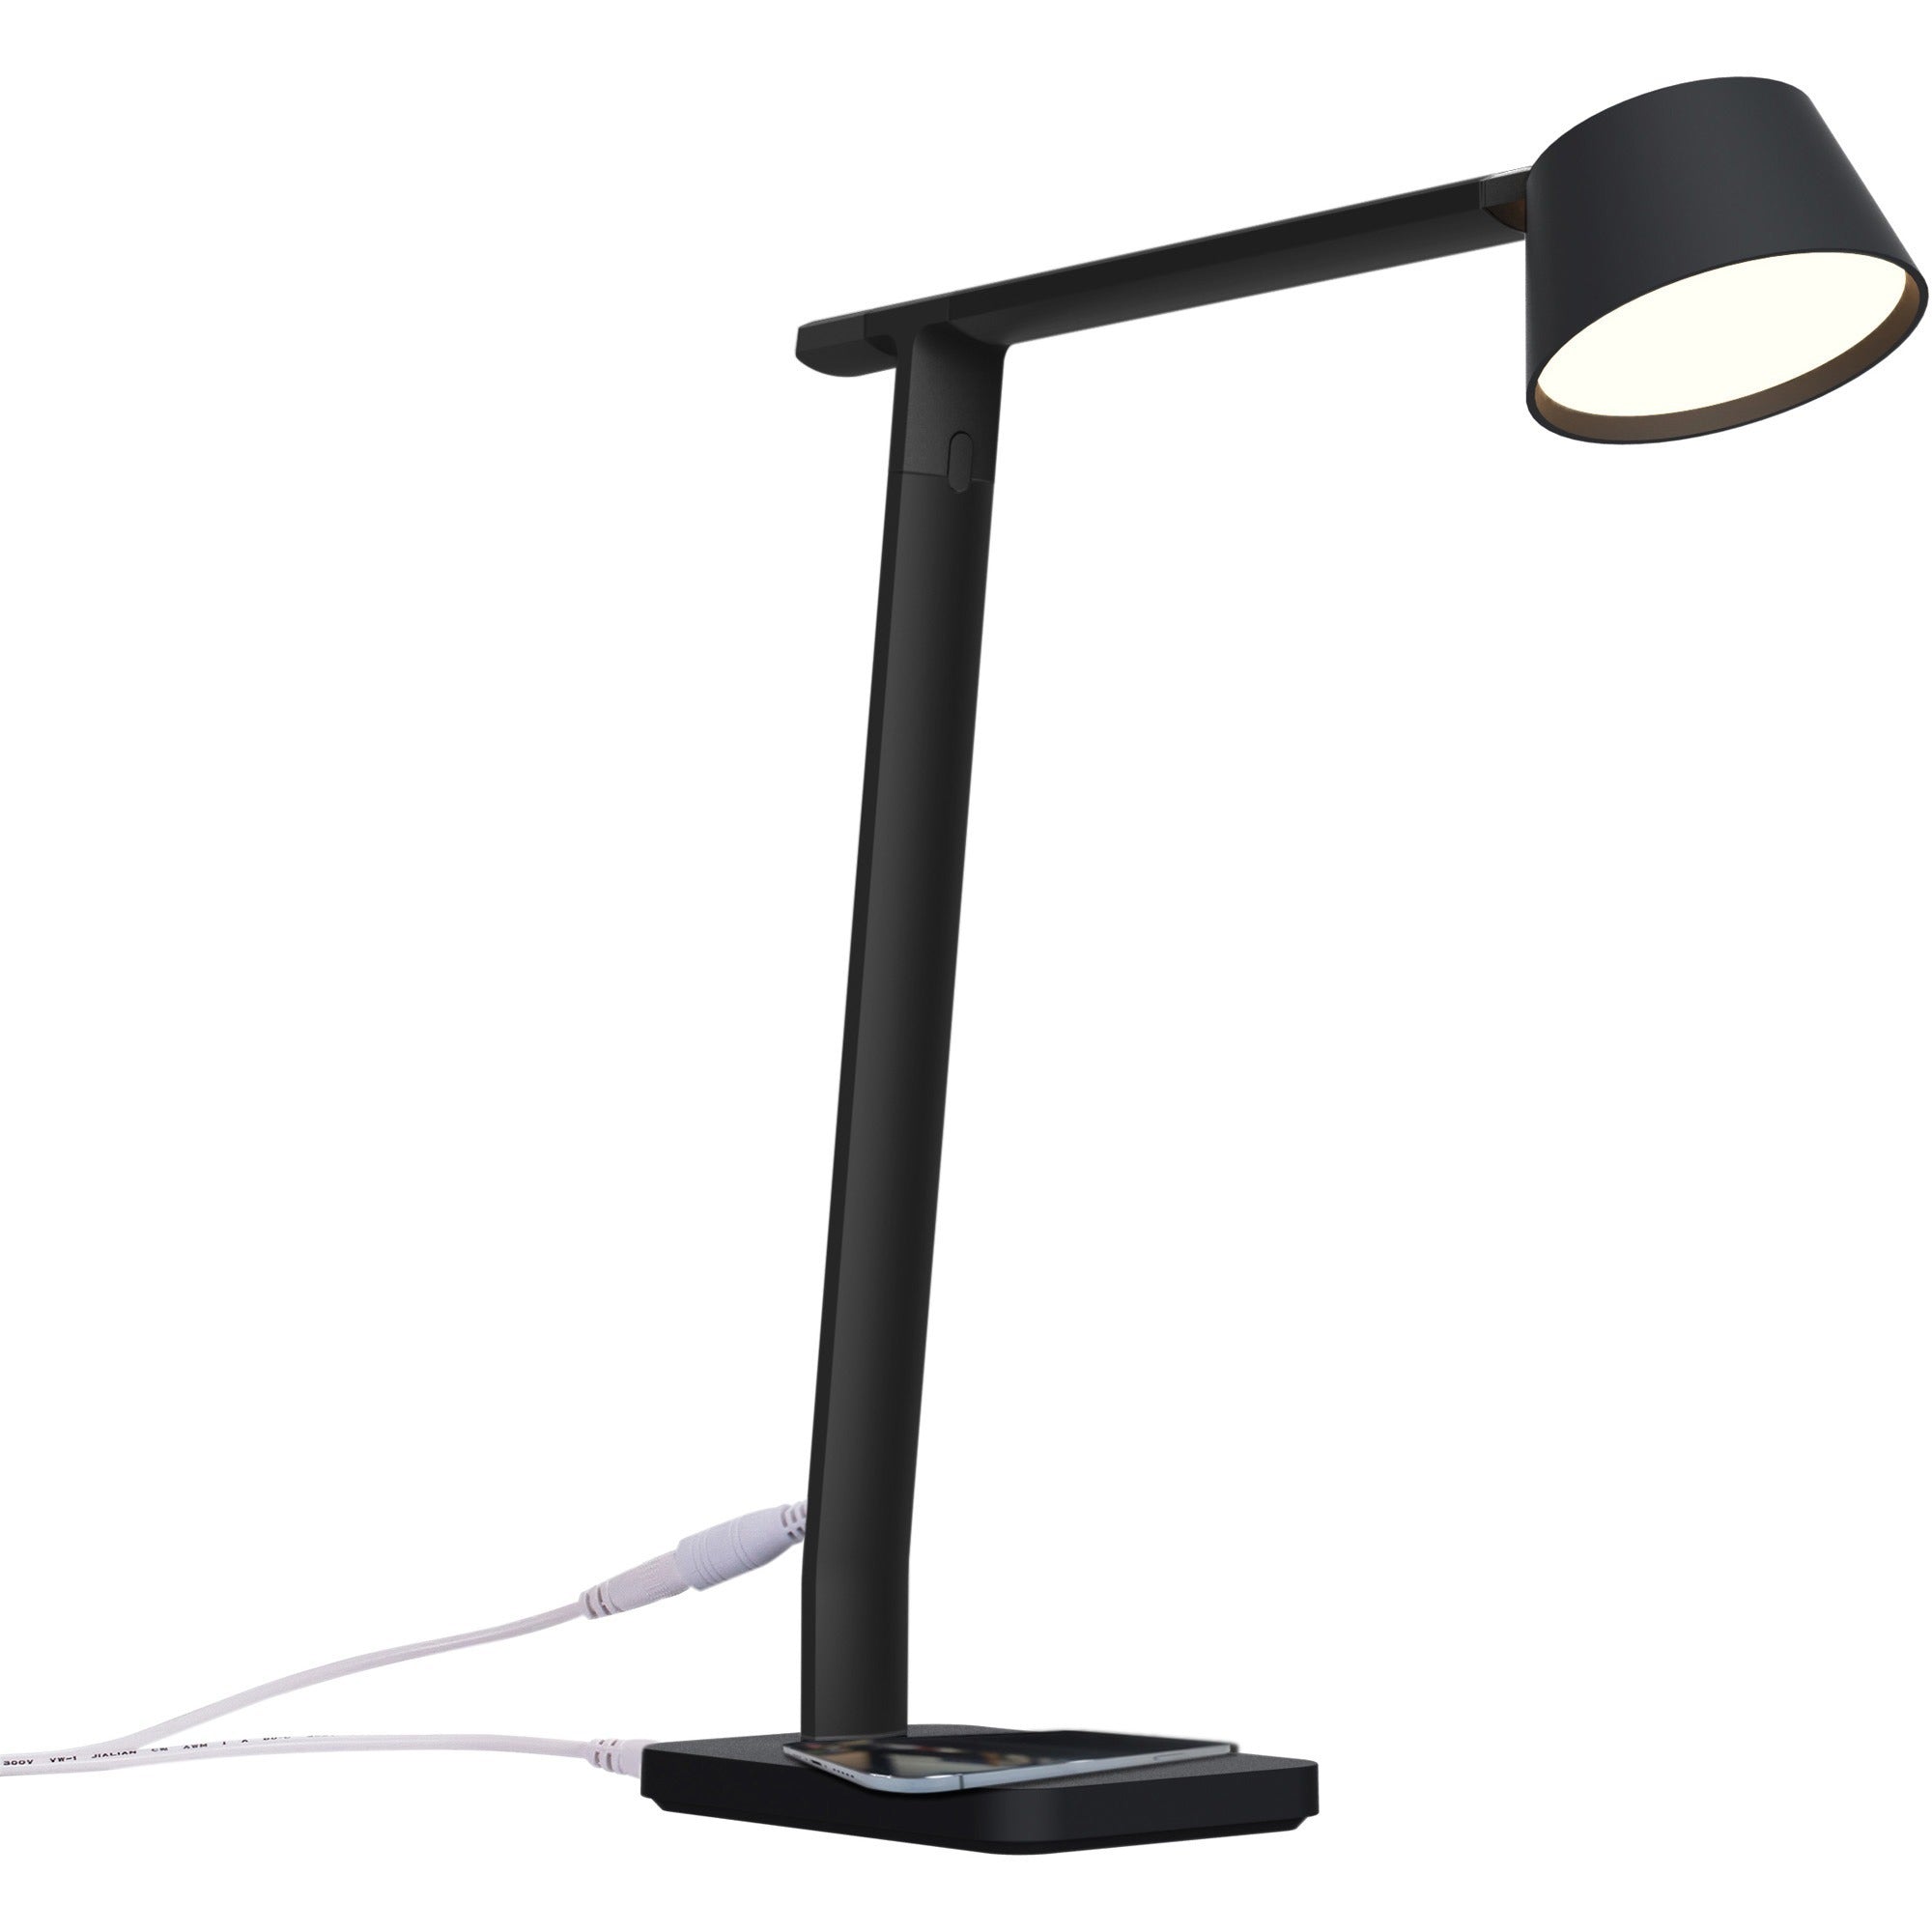 bostitch-verve-adjustable-led-desk-lamp-led-bulb-adjustable-dimmable-adjustable-brightness-clock-durable-wireless-charging-swivel-base-color-changing-mode-aluminum-desk-mountable-black-for-desk-alexa-supported_bos2200qismbk - 1